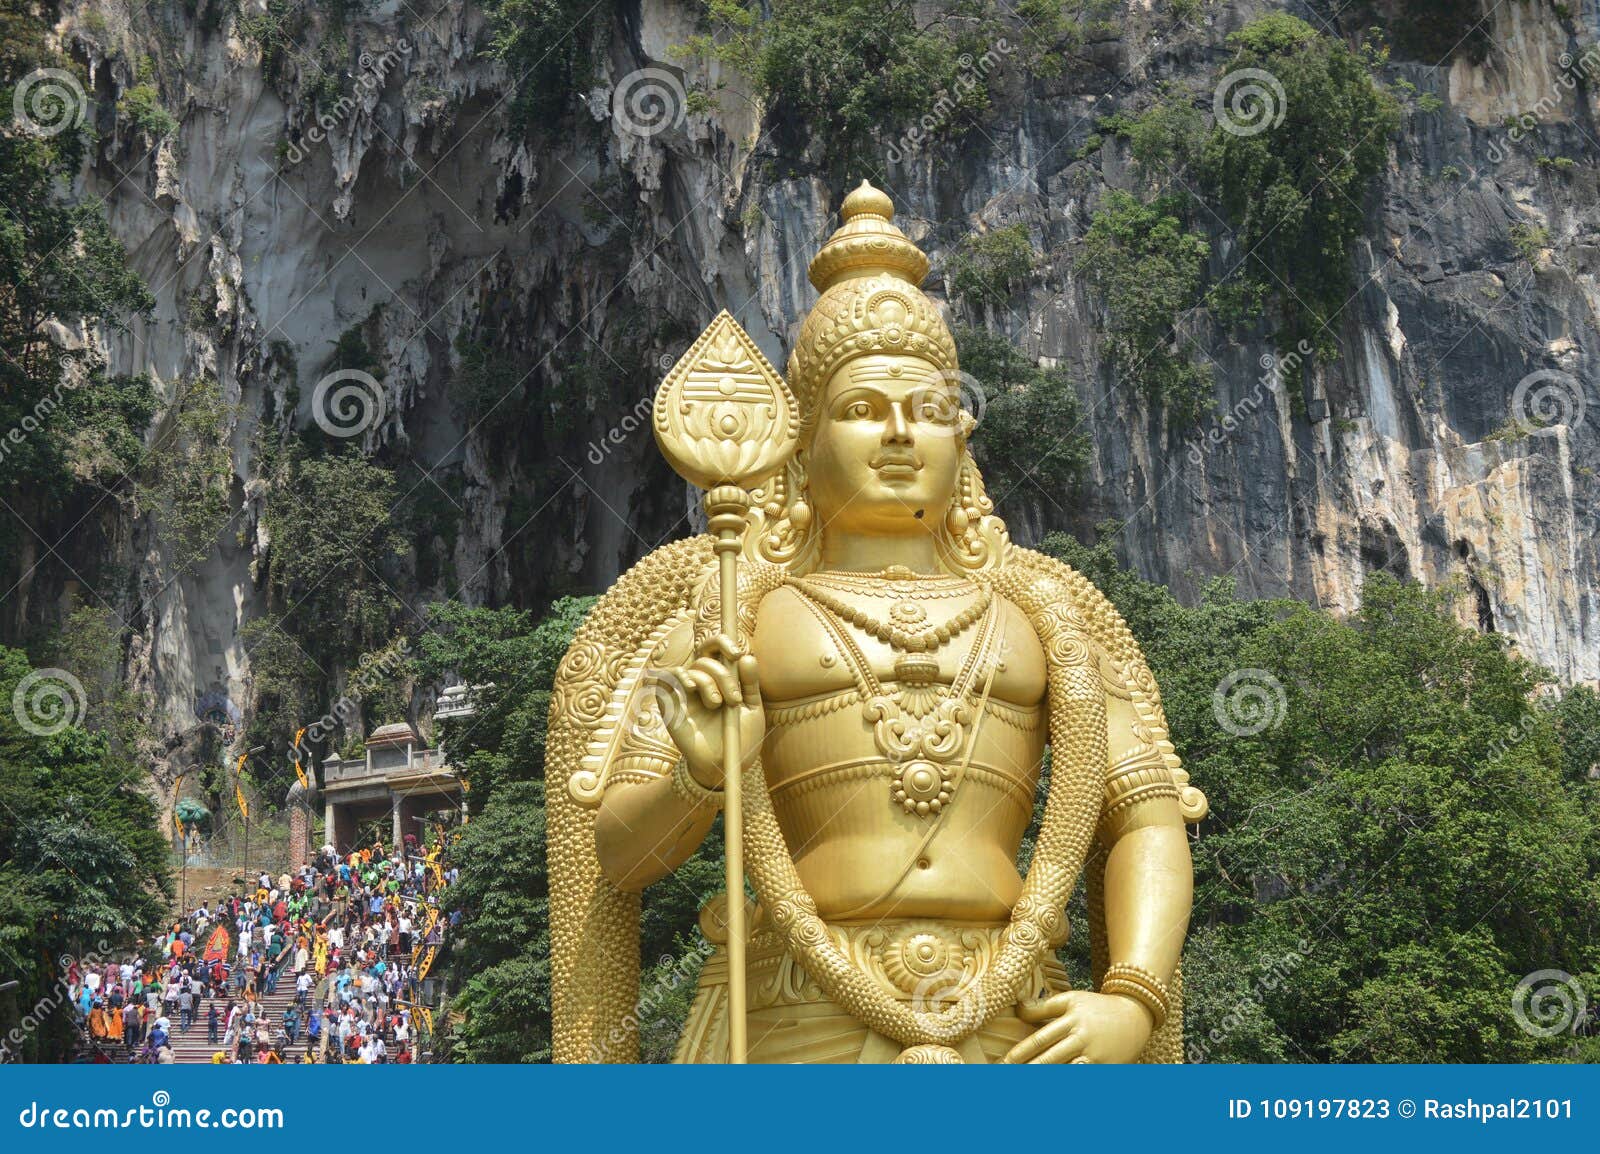 Lord Murugan Golden Statue in Batu Caves Editorial Stock Photo ...